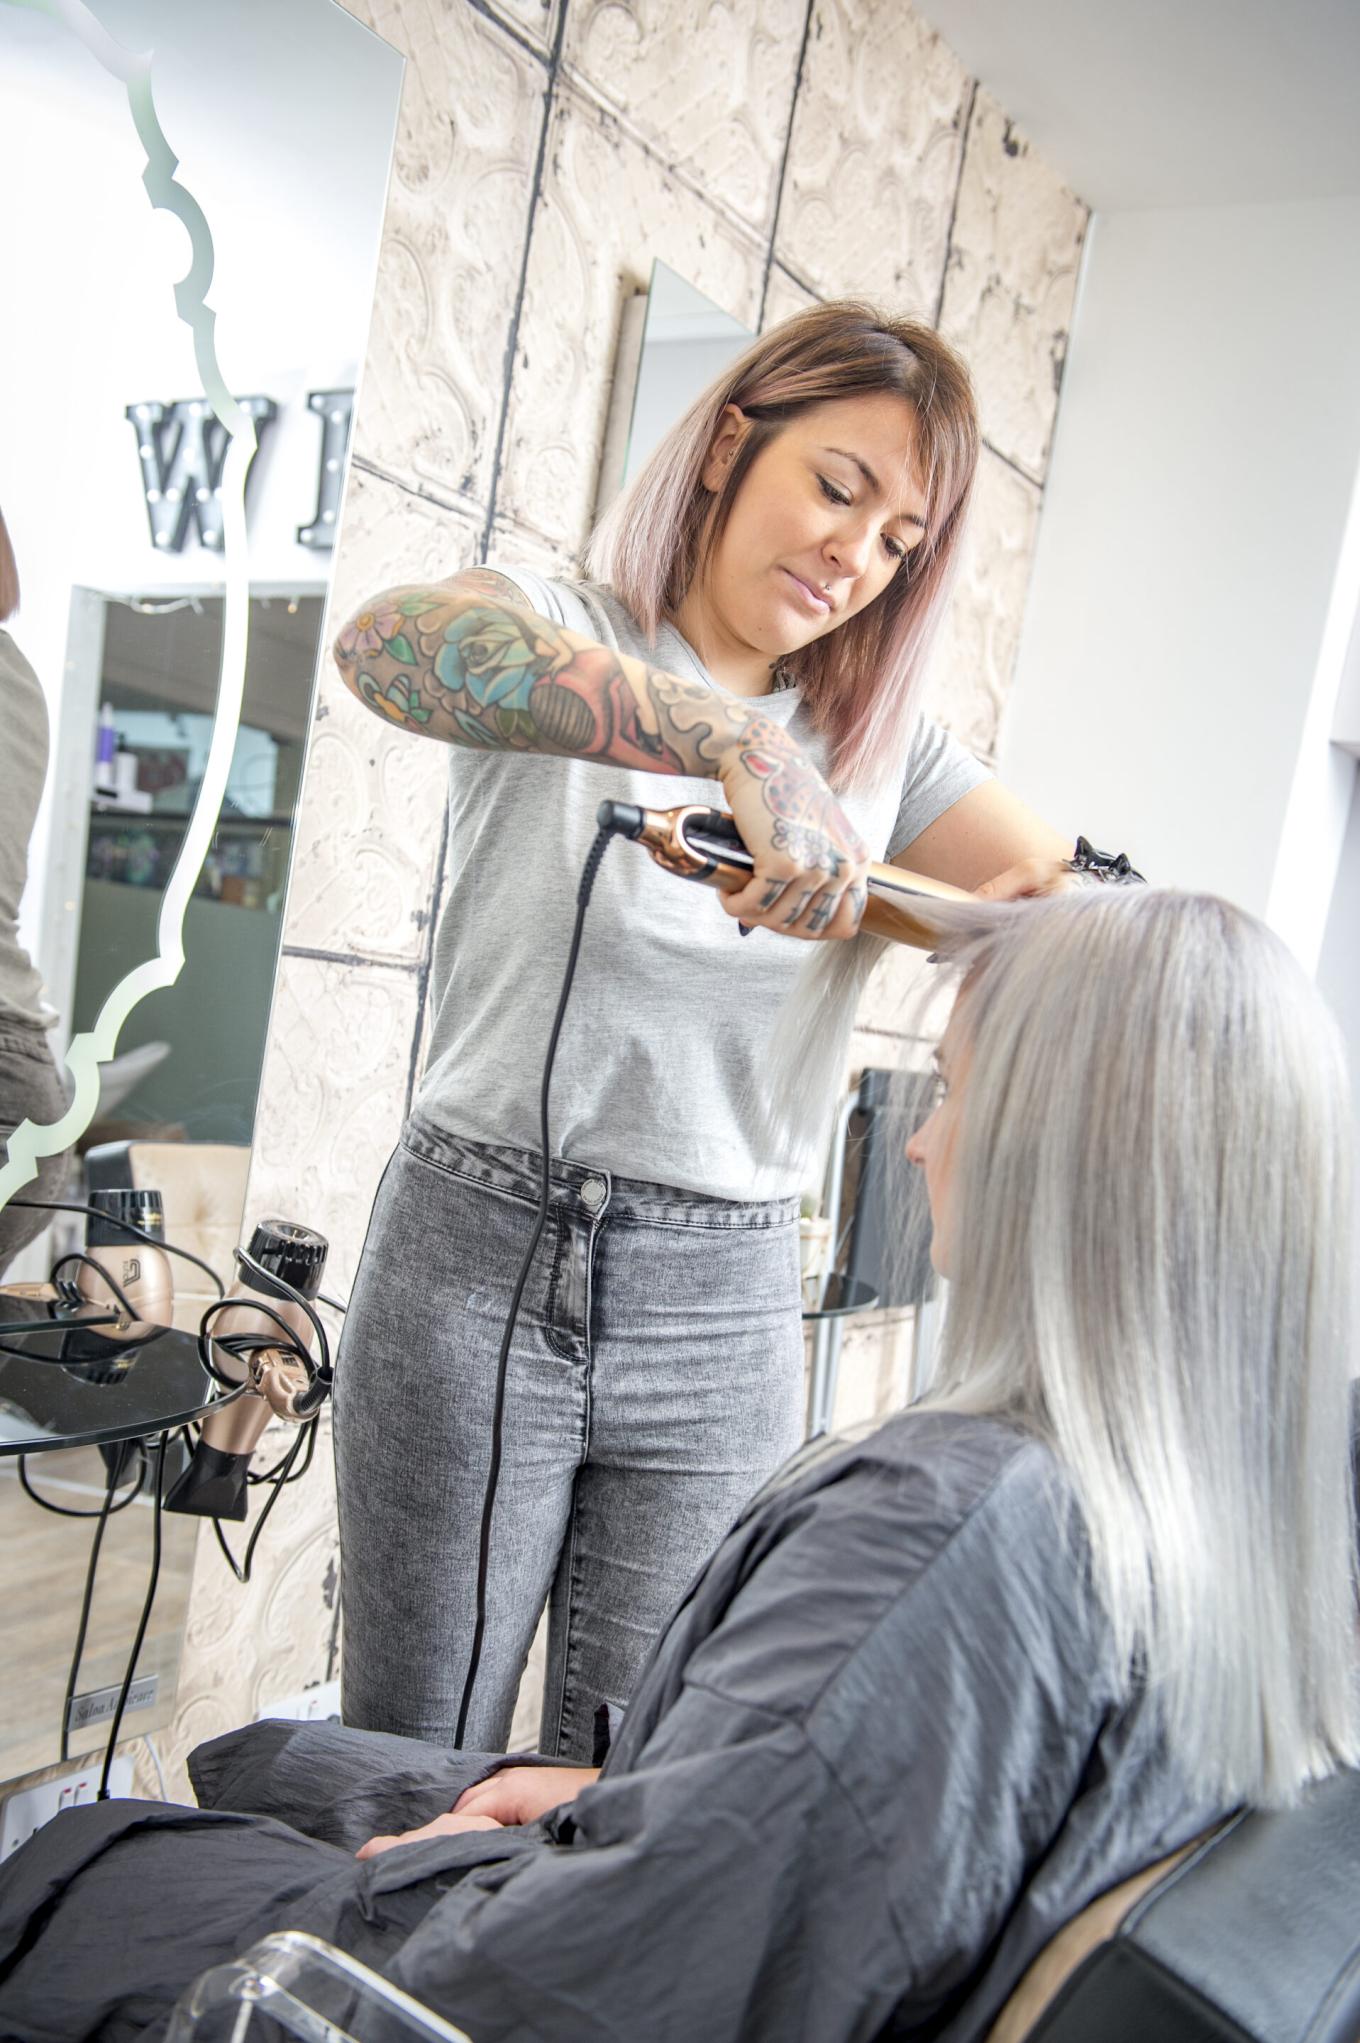 A hairdresser straightening a woman's hair in a salon